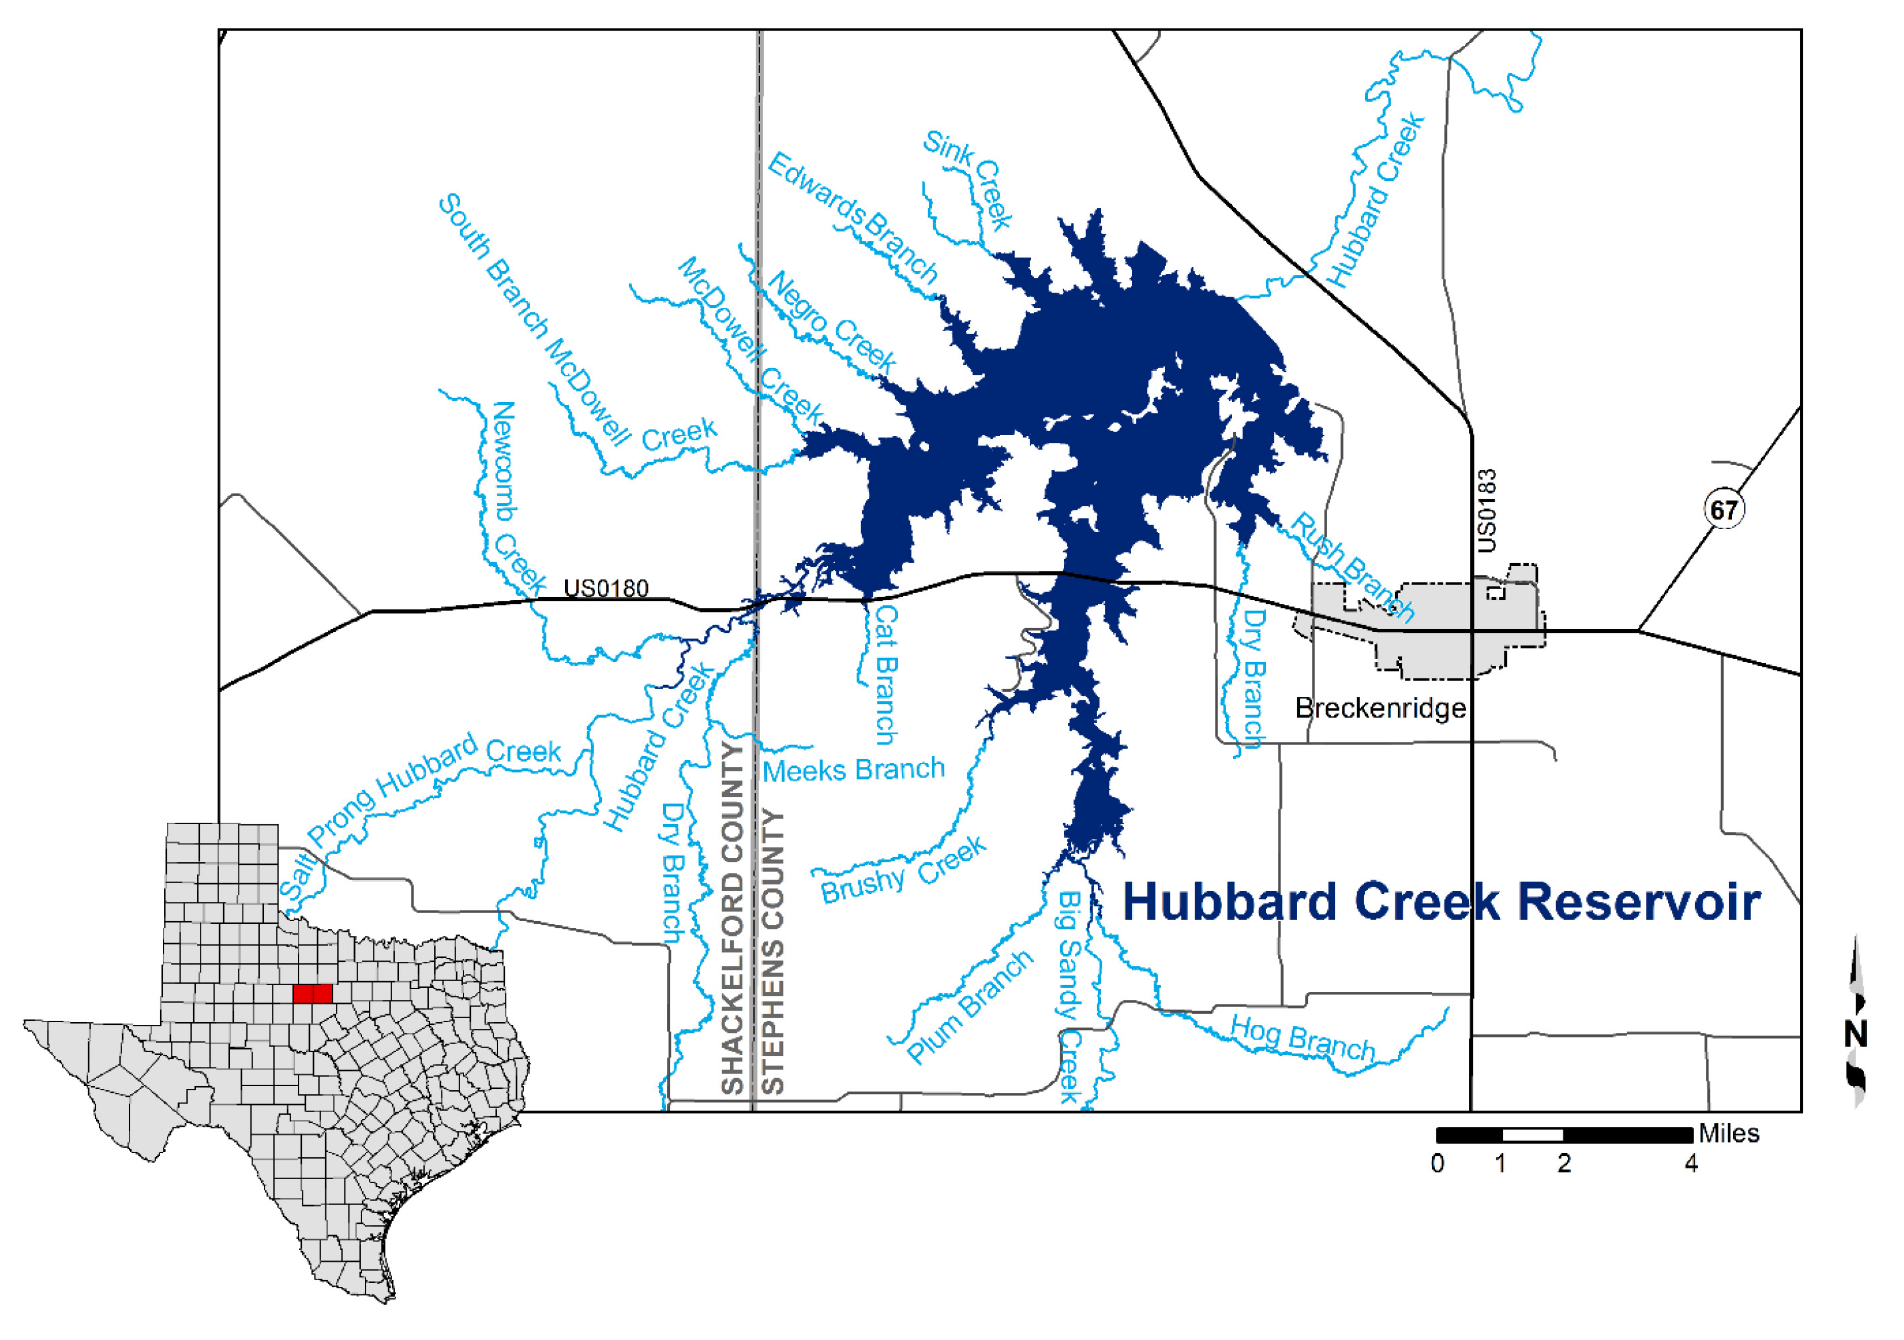 New details on Hubbard Creek Reservoir